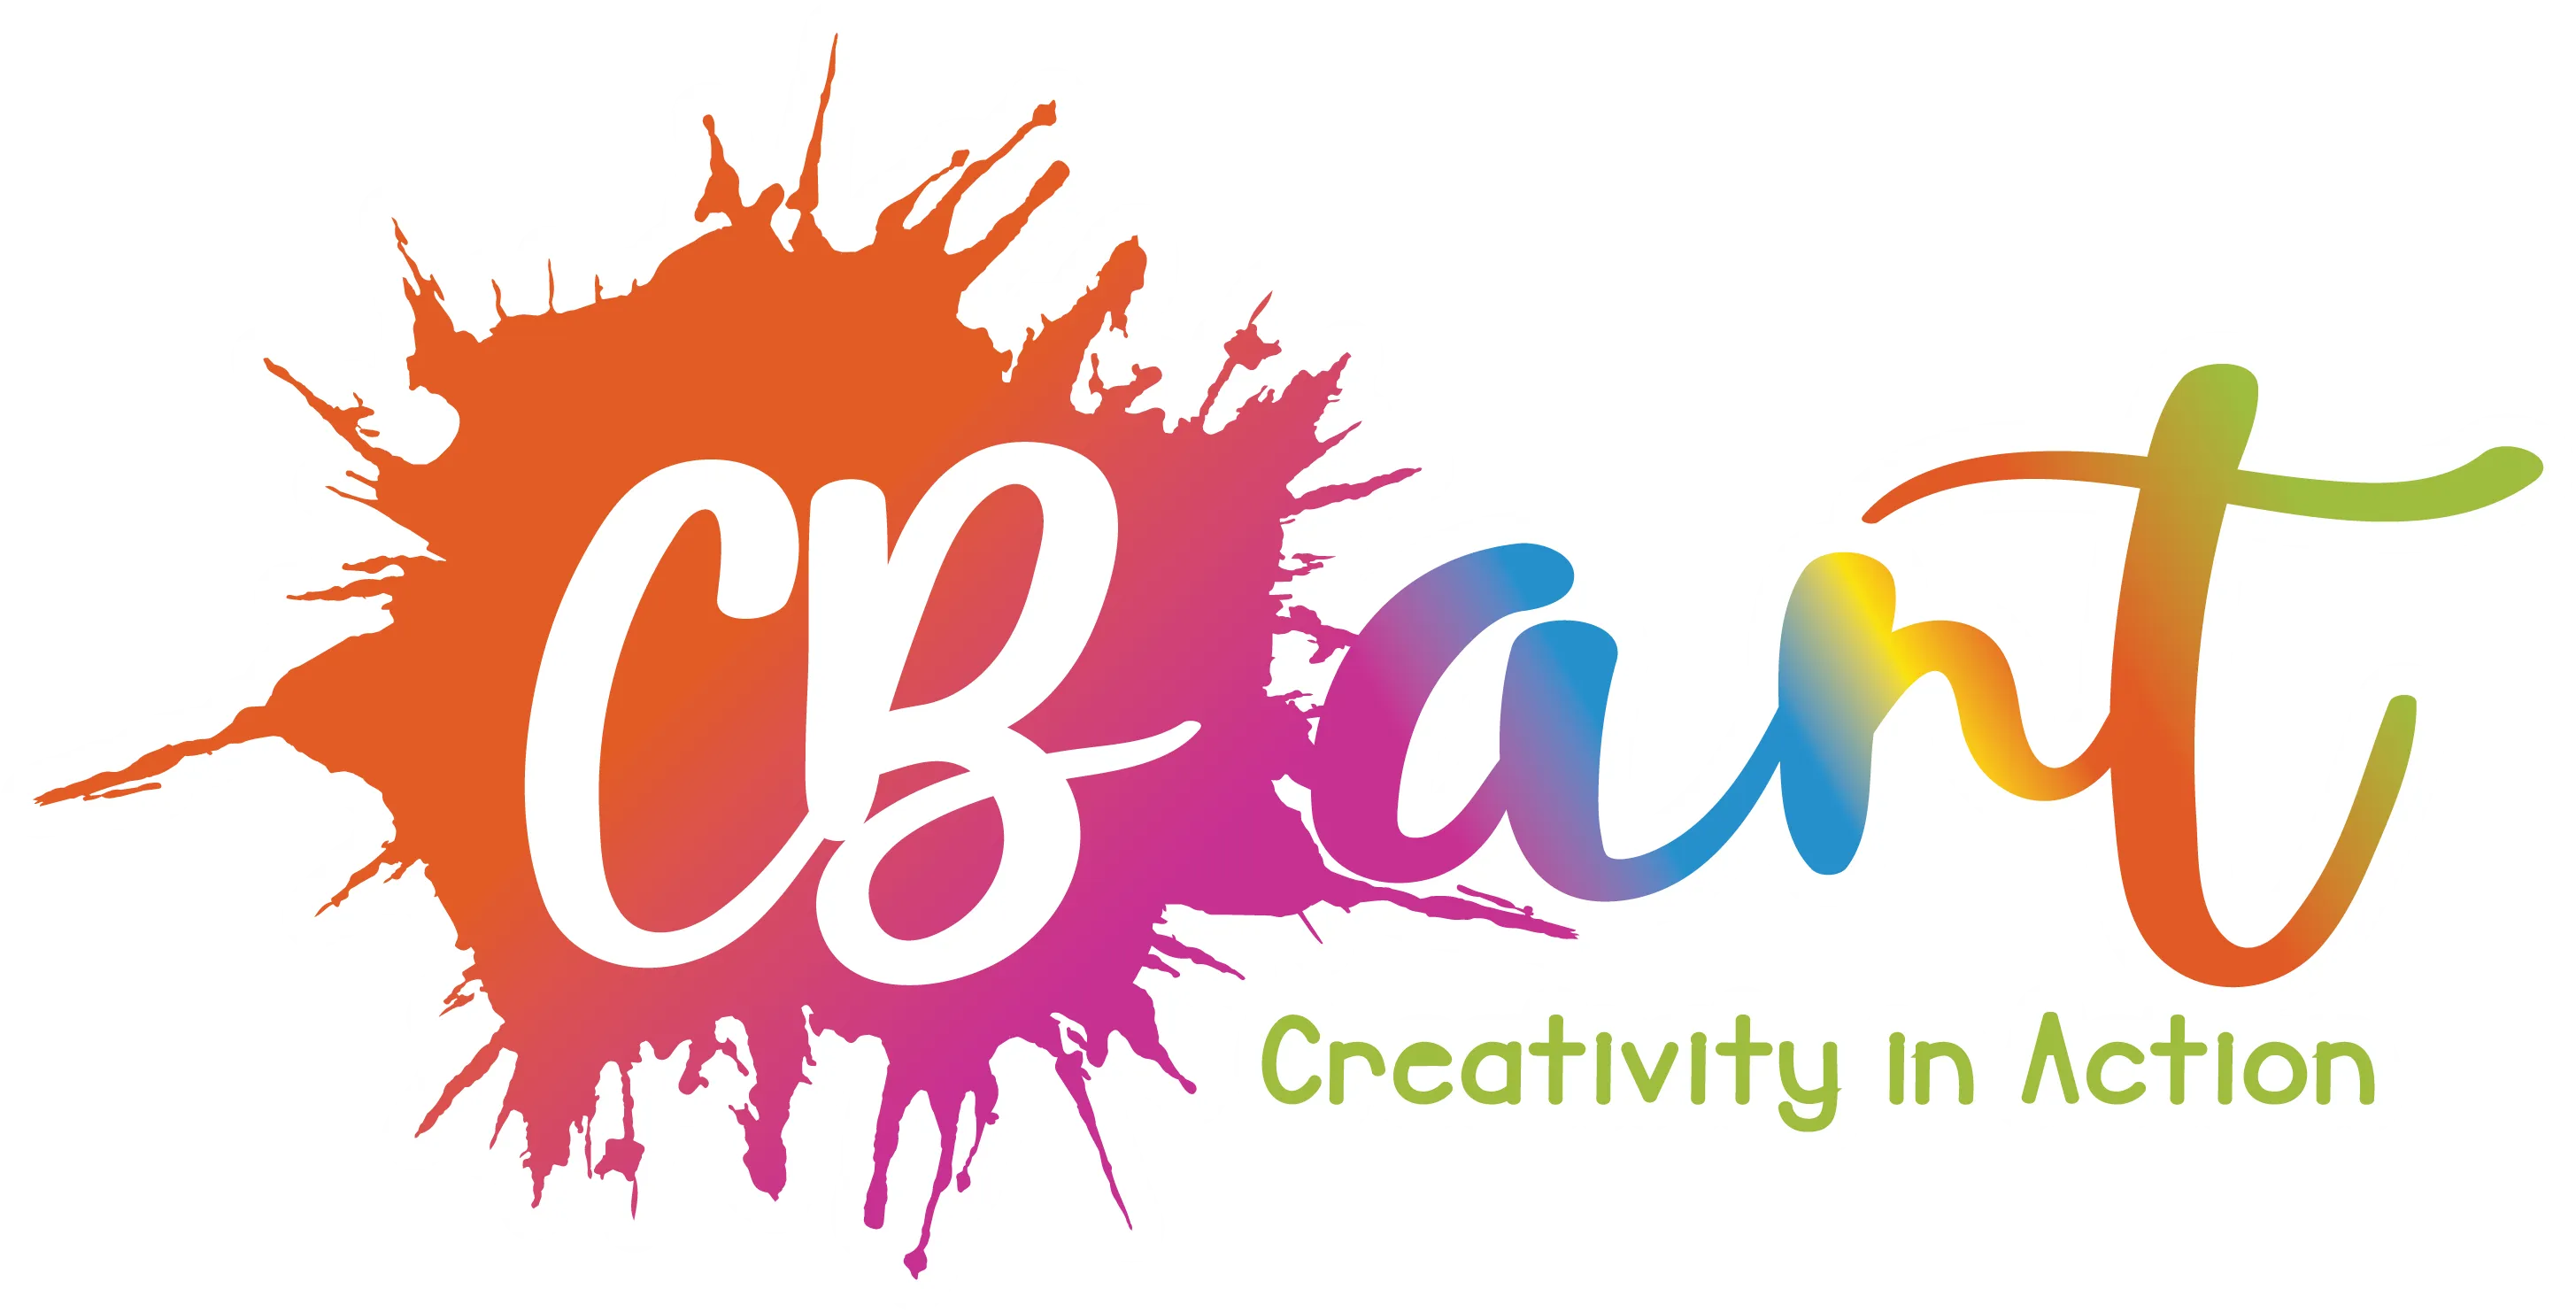 CBArt Studios logo